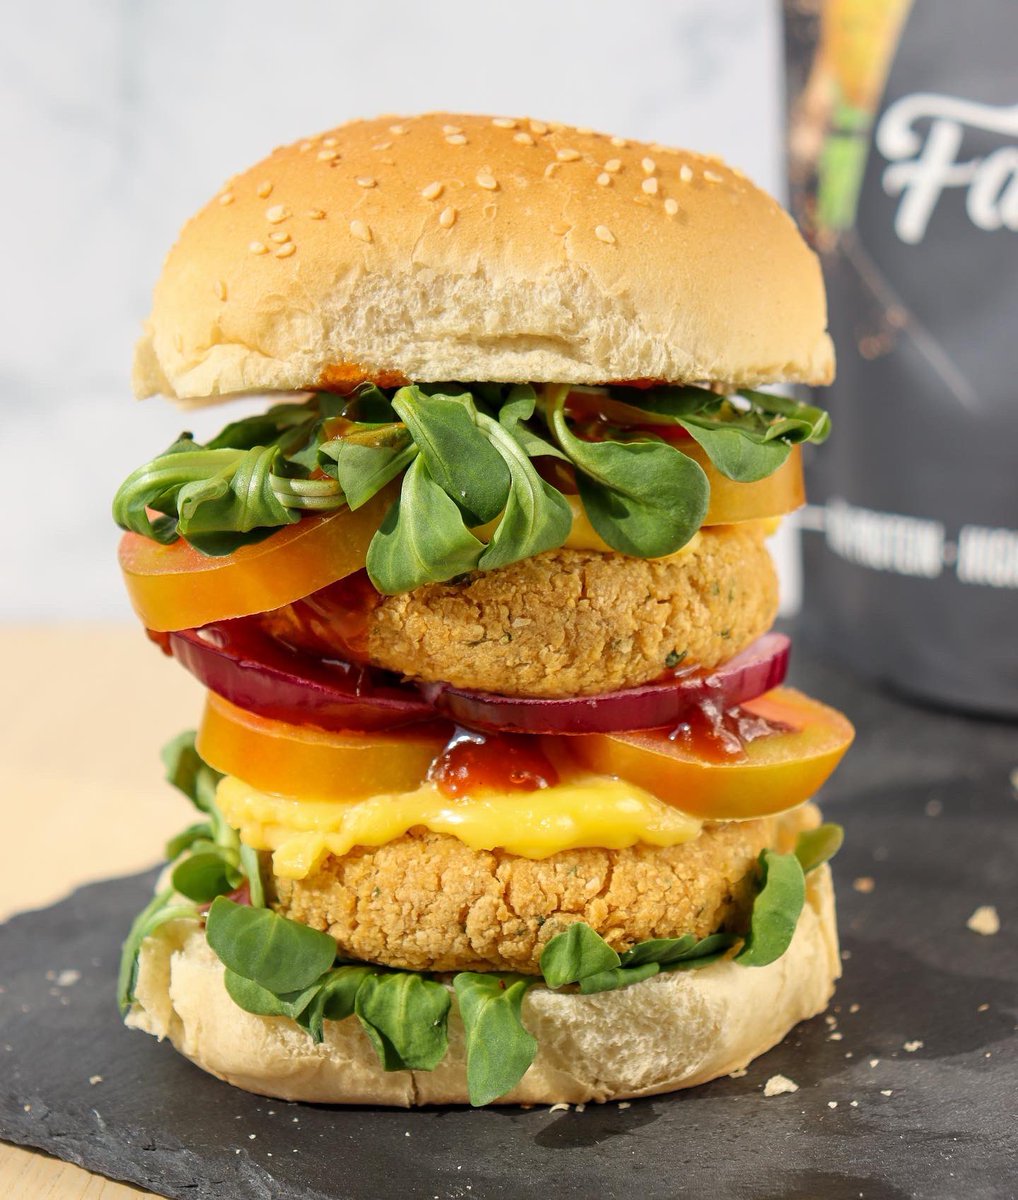 🍔😍😋Double Vegan Falafel Burger 🌱🧆🥙🤩
Recipes here: instagram.com/p/CMe02xeFQuE/ 
#iamfitandsweet #vegan #vegancookoff #veganfood #16marzo #falafel #burger #nu3 #italianfoodblogger #foodbloggermilano #food #influencers #ghigliottina #coronavirus #isoladeifamosi #COVID19